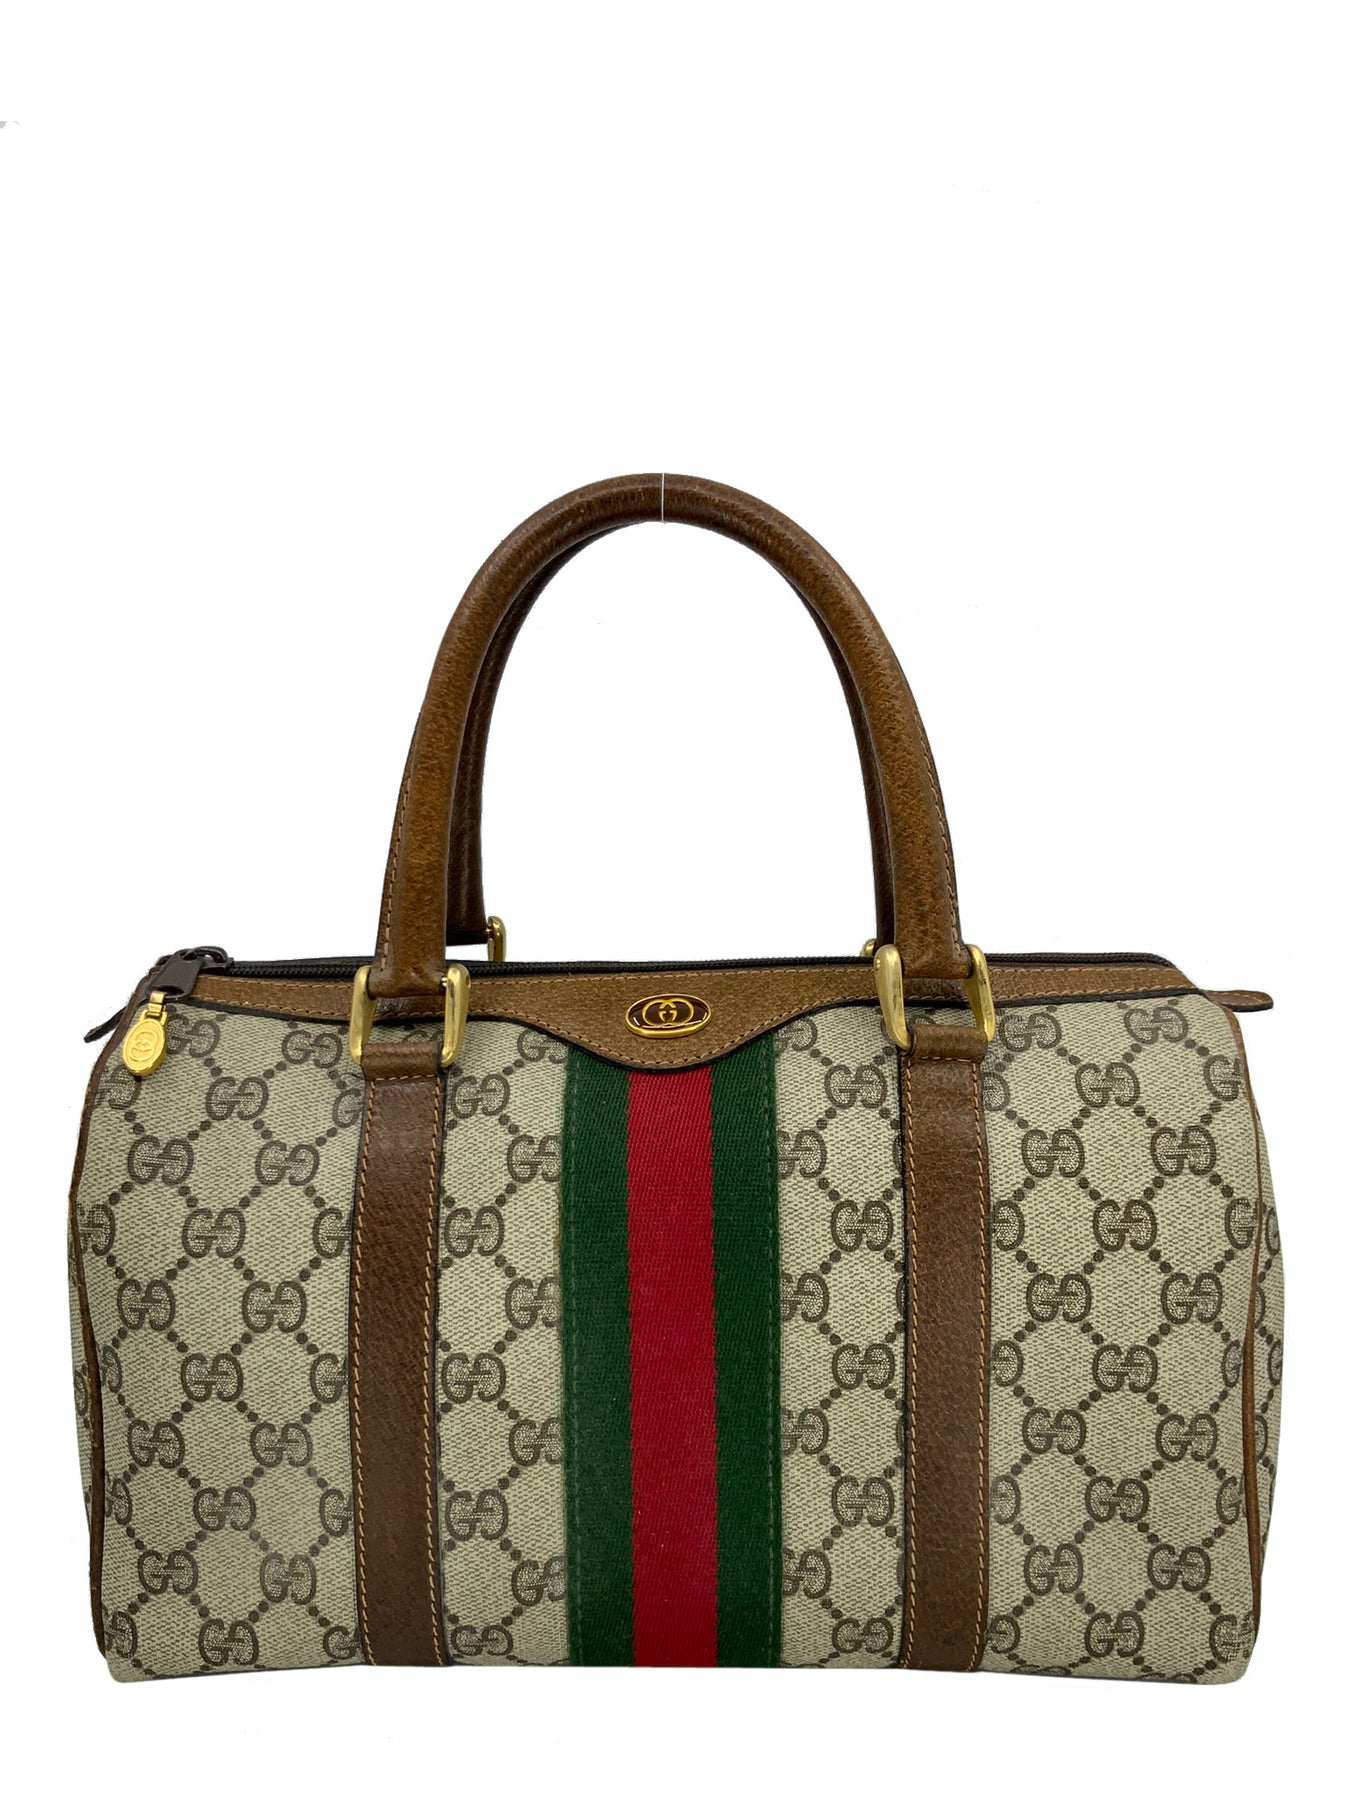 Gucci Leather And Gg Fabric Medium Boston Bag